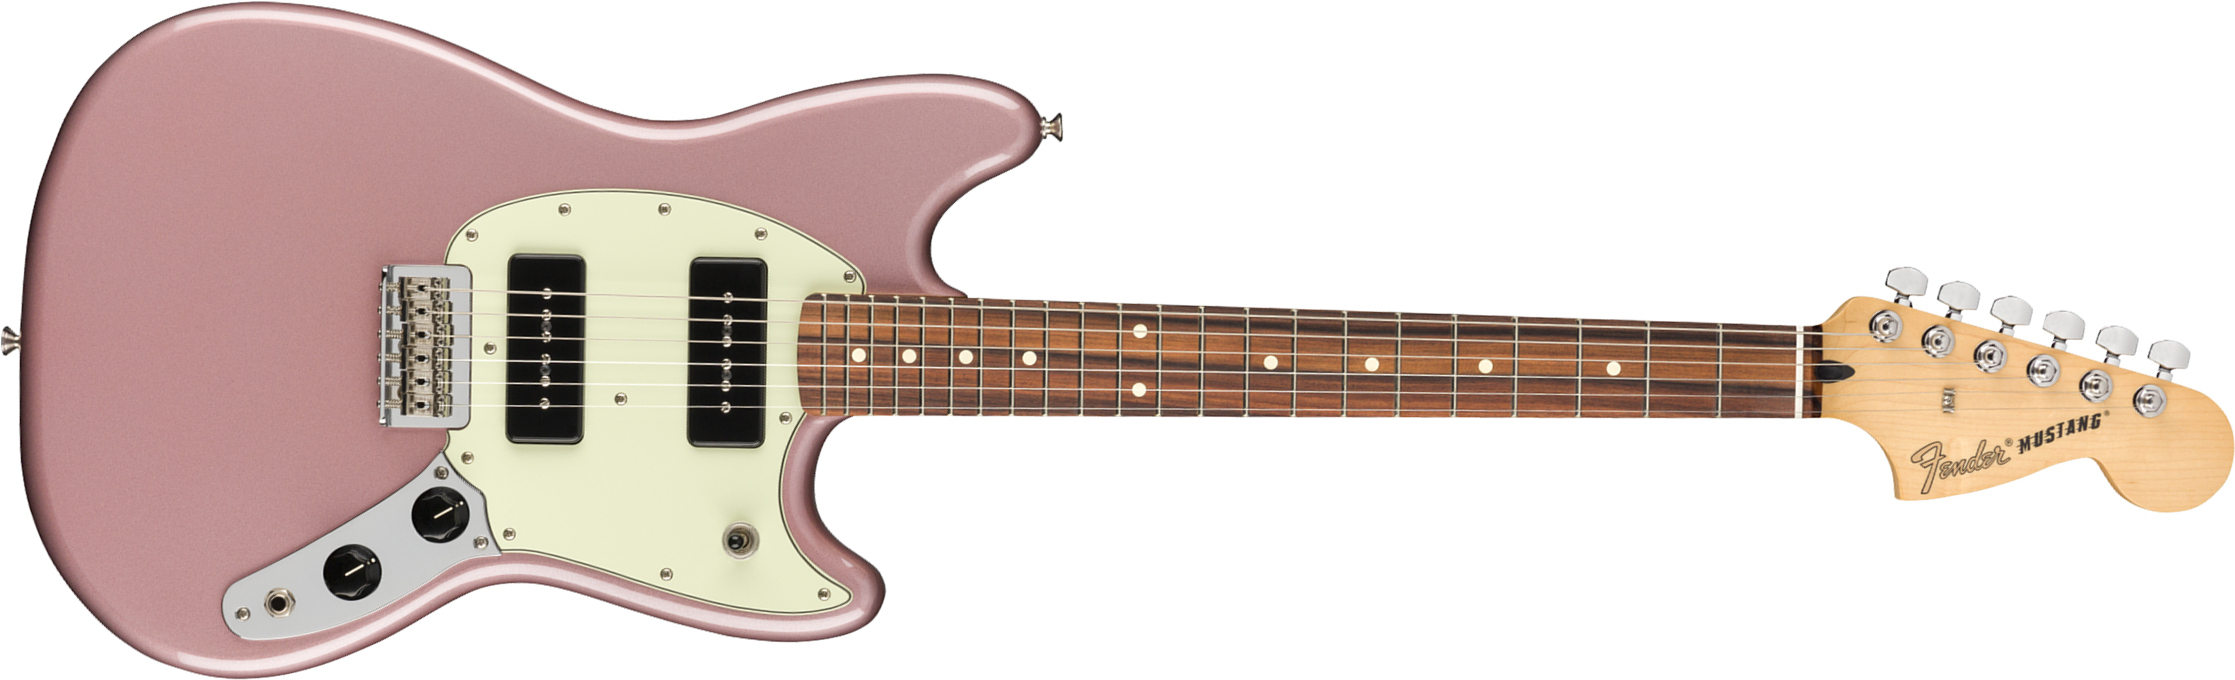 Fender Mustang Player 90 Mex Ht 2p90 Pf - Burgundy Mist Metallic - Retro rock electric guitar - Main picture